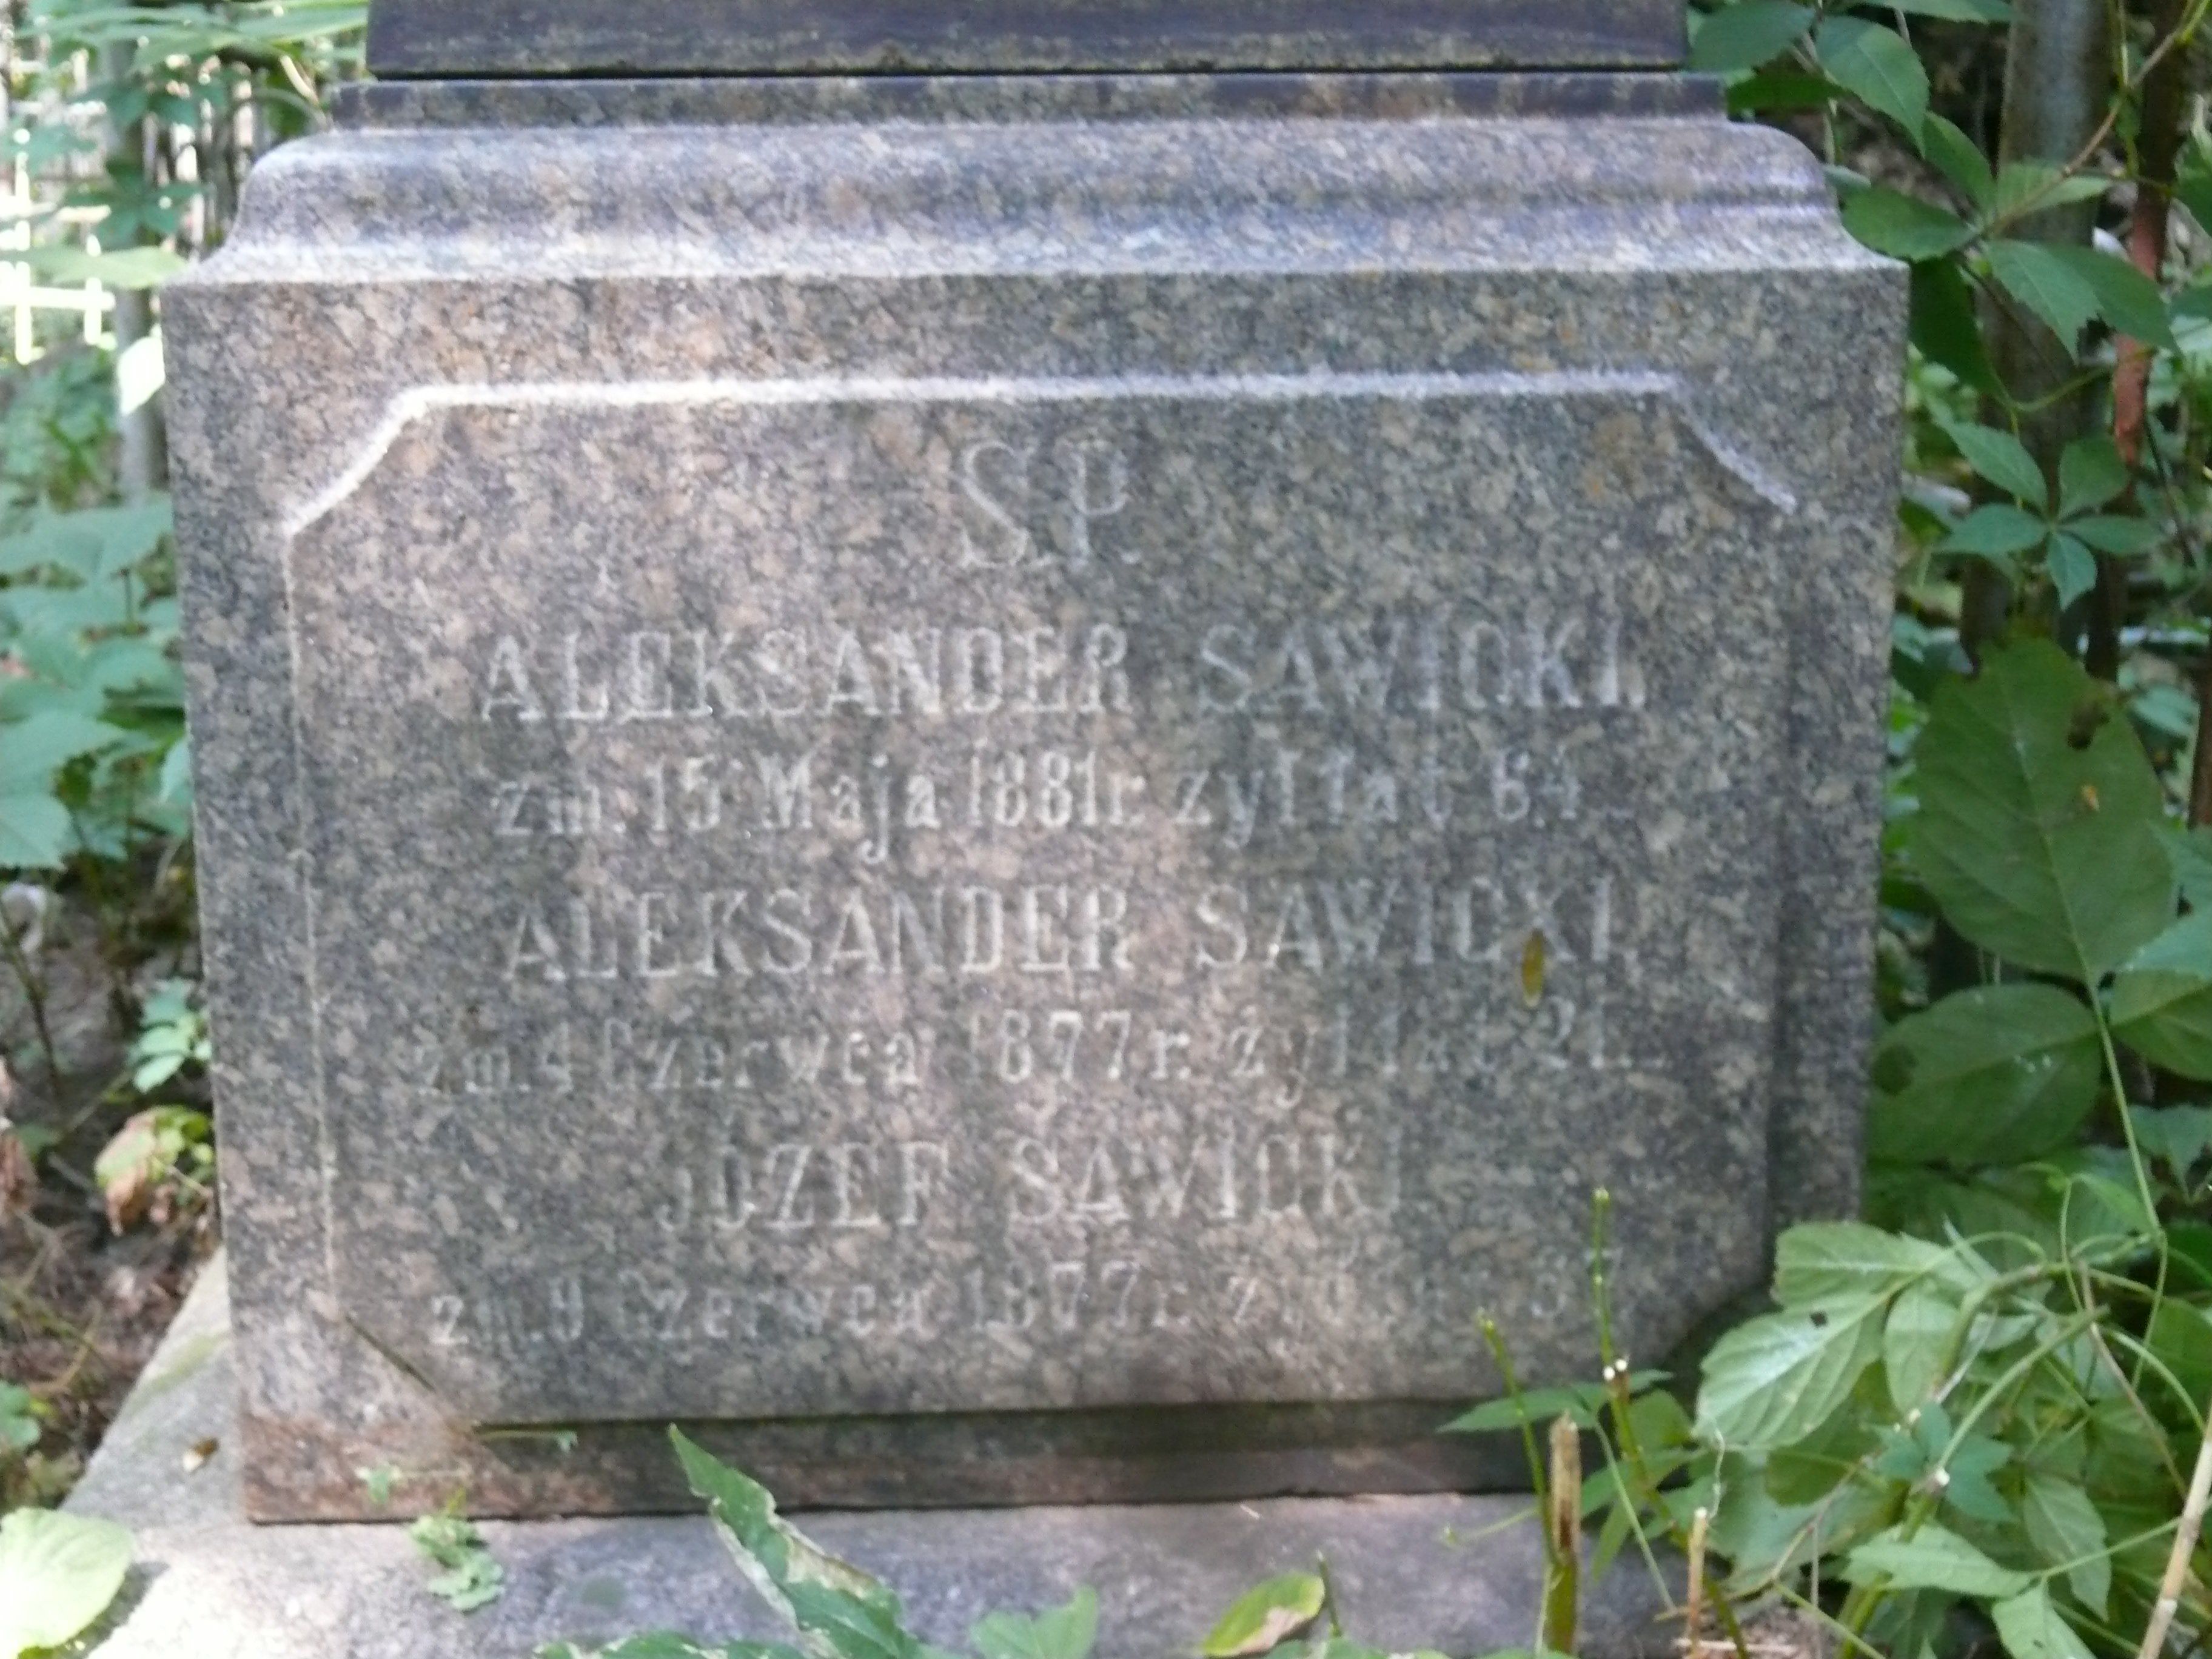 Gravestone inscription of Aleksander Sawicki, Aleksander Sawicki, Józef Sawicki